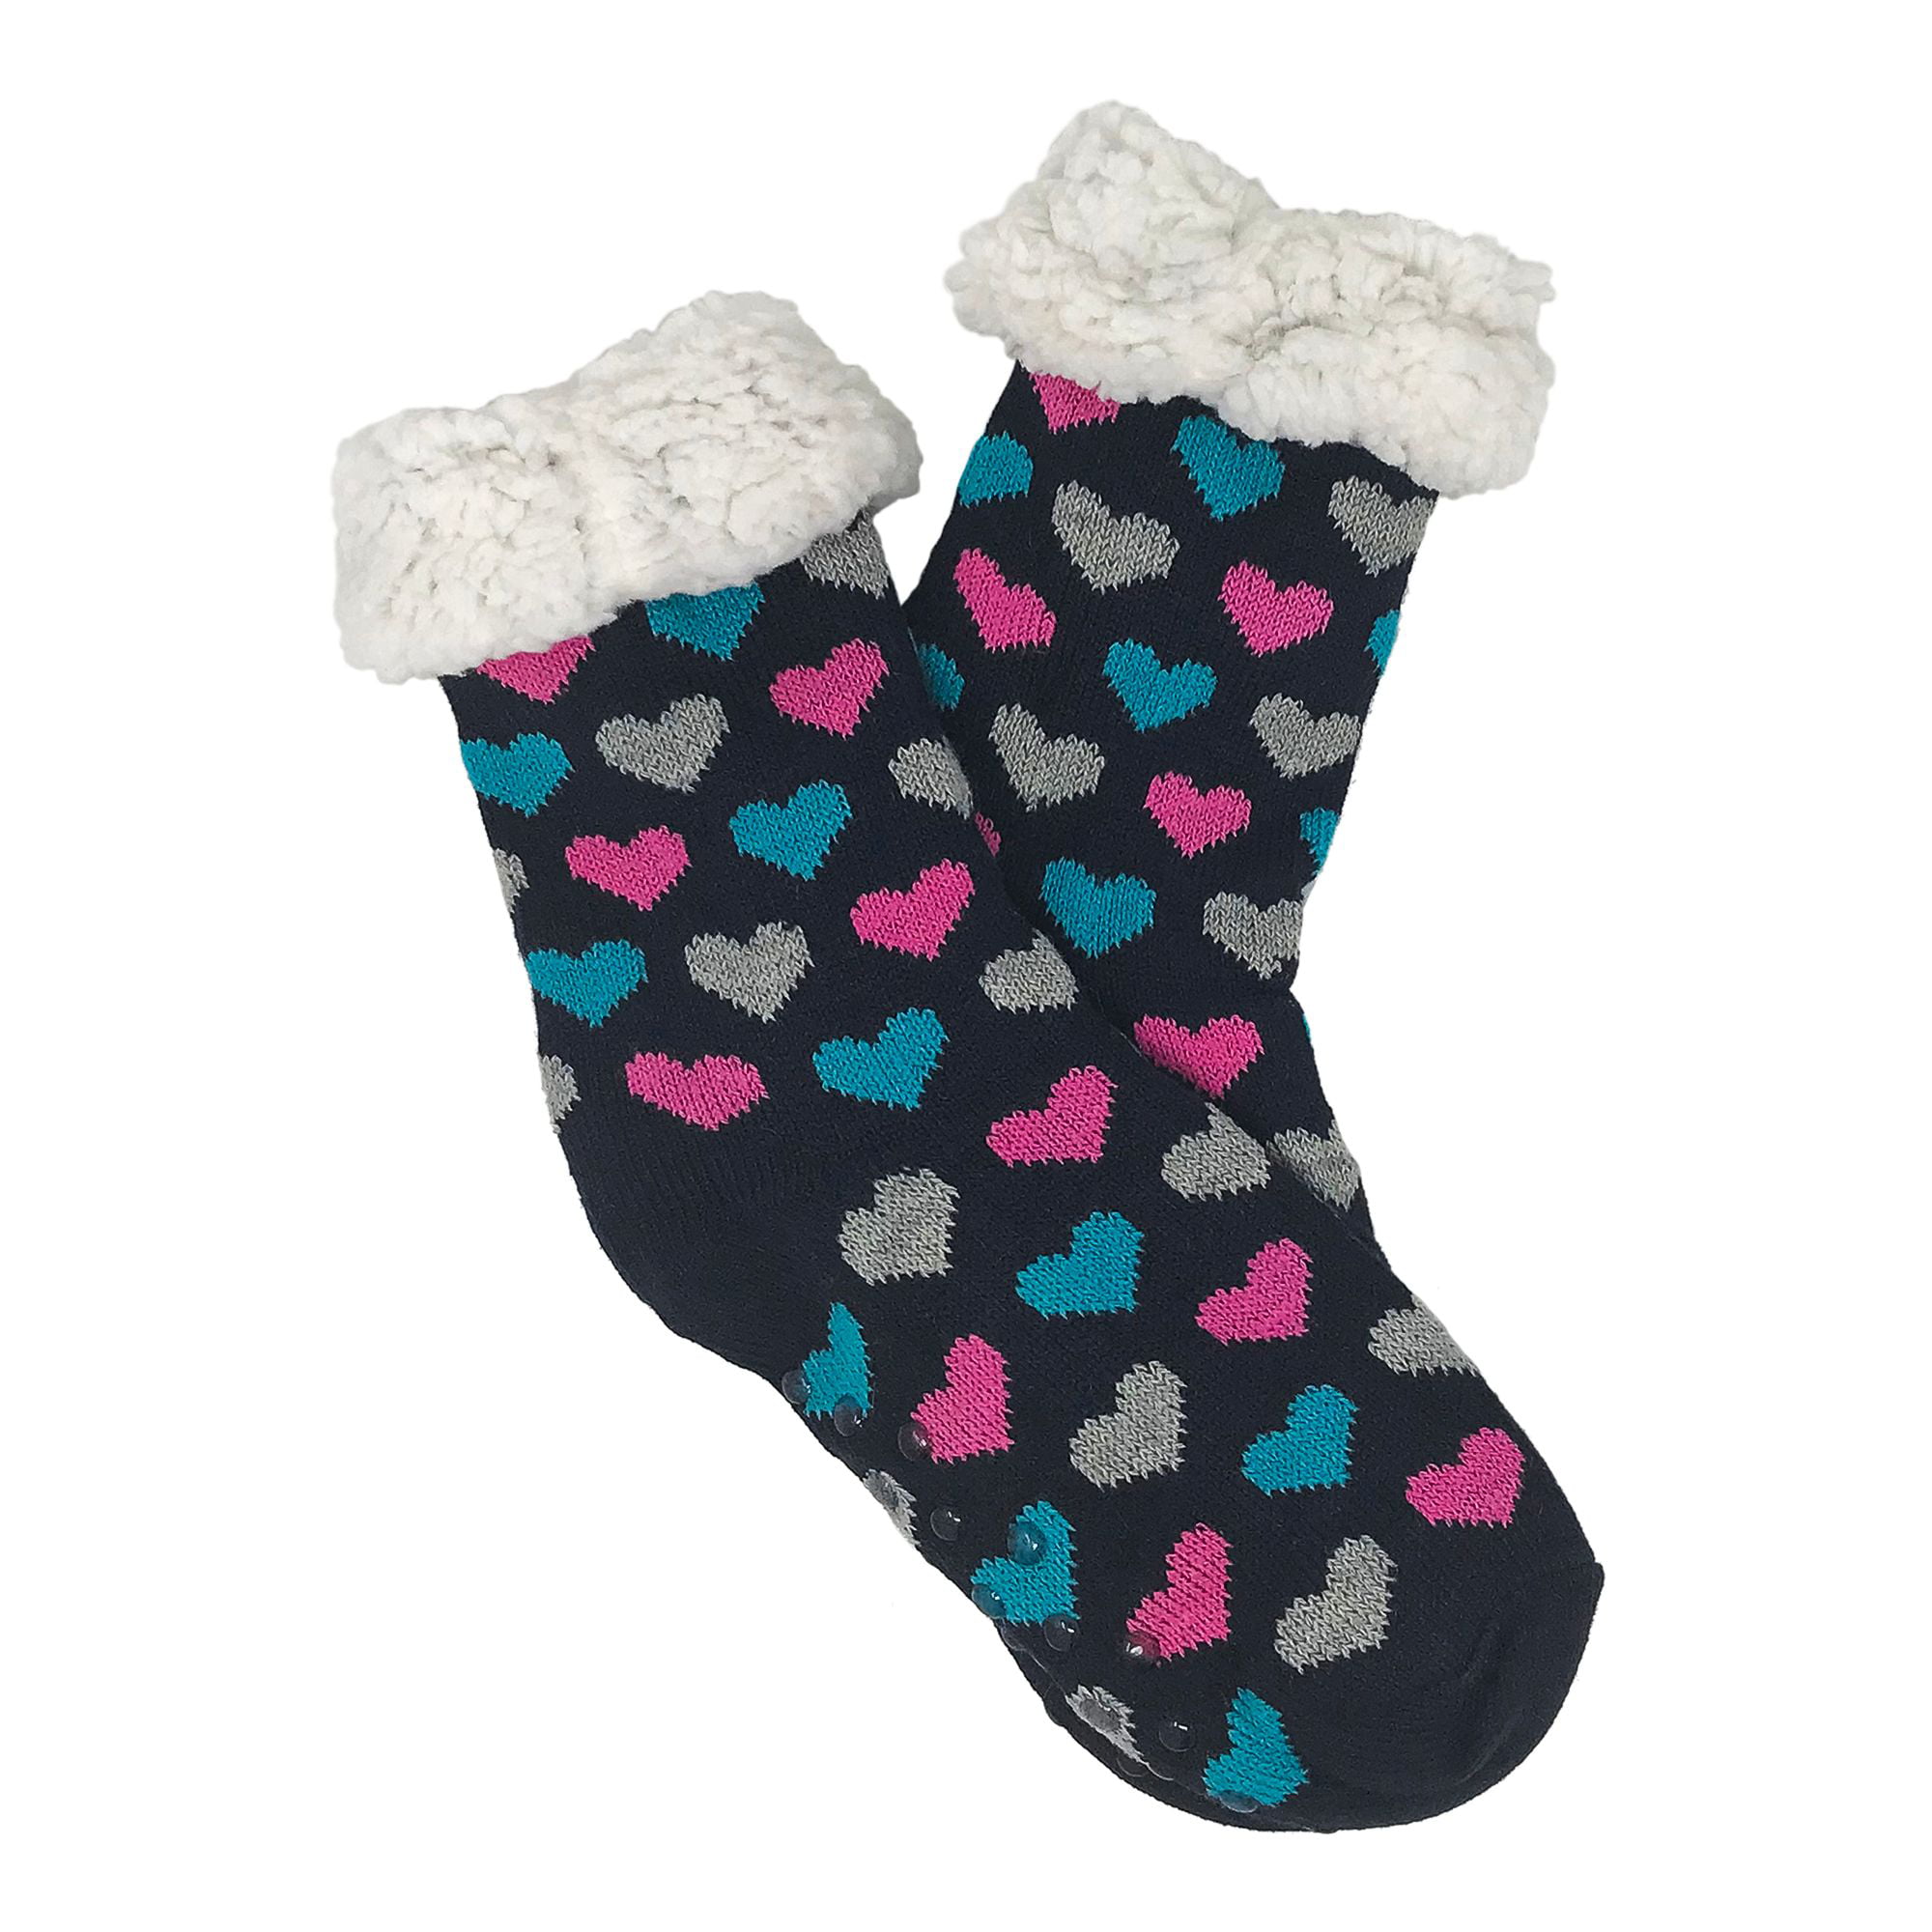 Toddler 2T-4T Family Fun Holiday Matching Socks Christmas Gnome Socks 